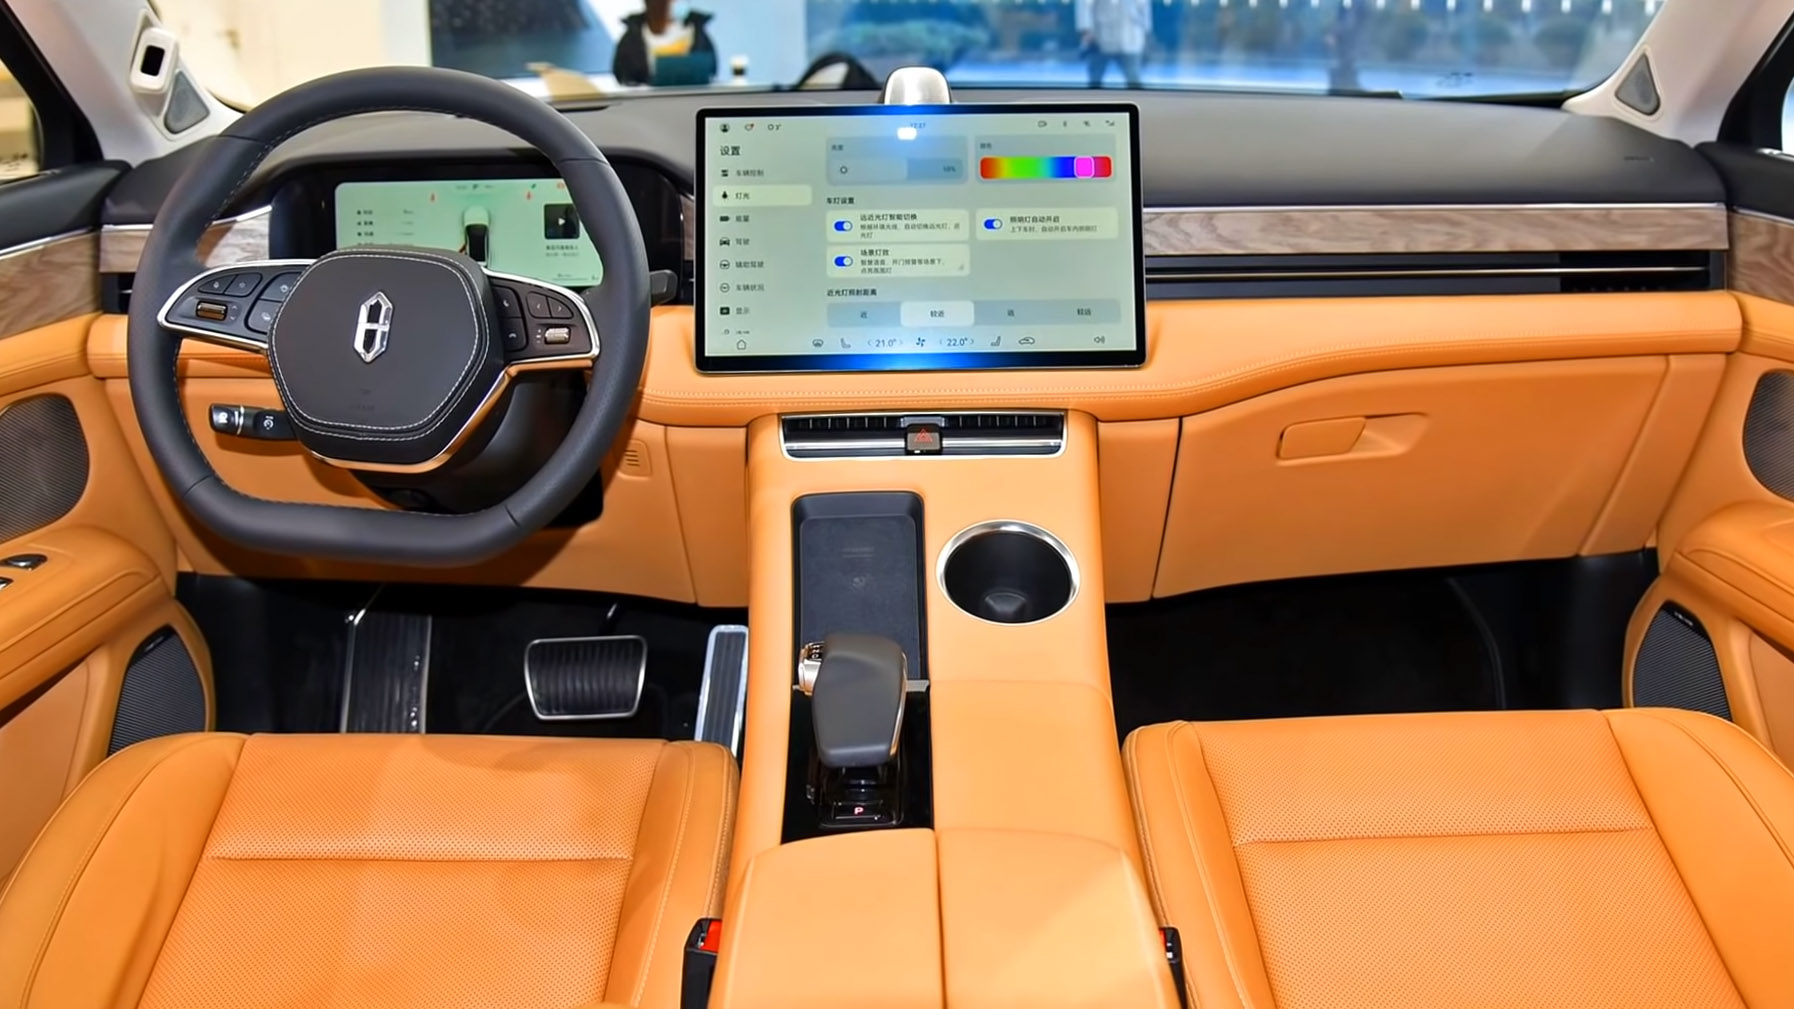 VW said buy Huawei's autonomous self-driving car platform for US$1.6 billion - NotebookCheck.net News